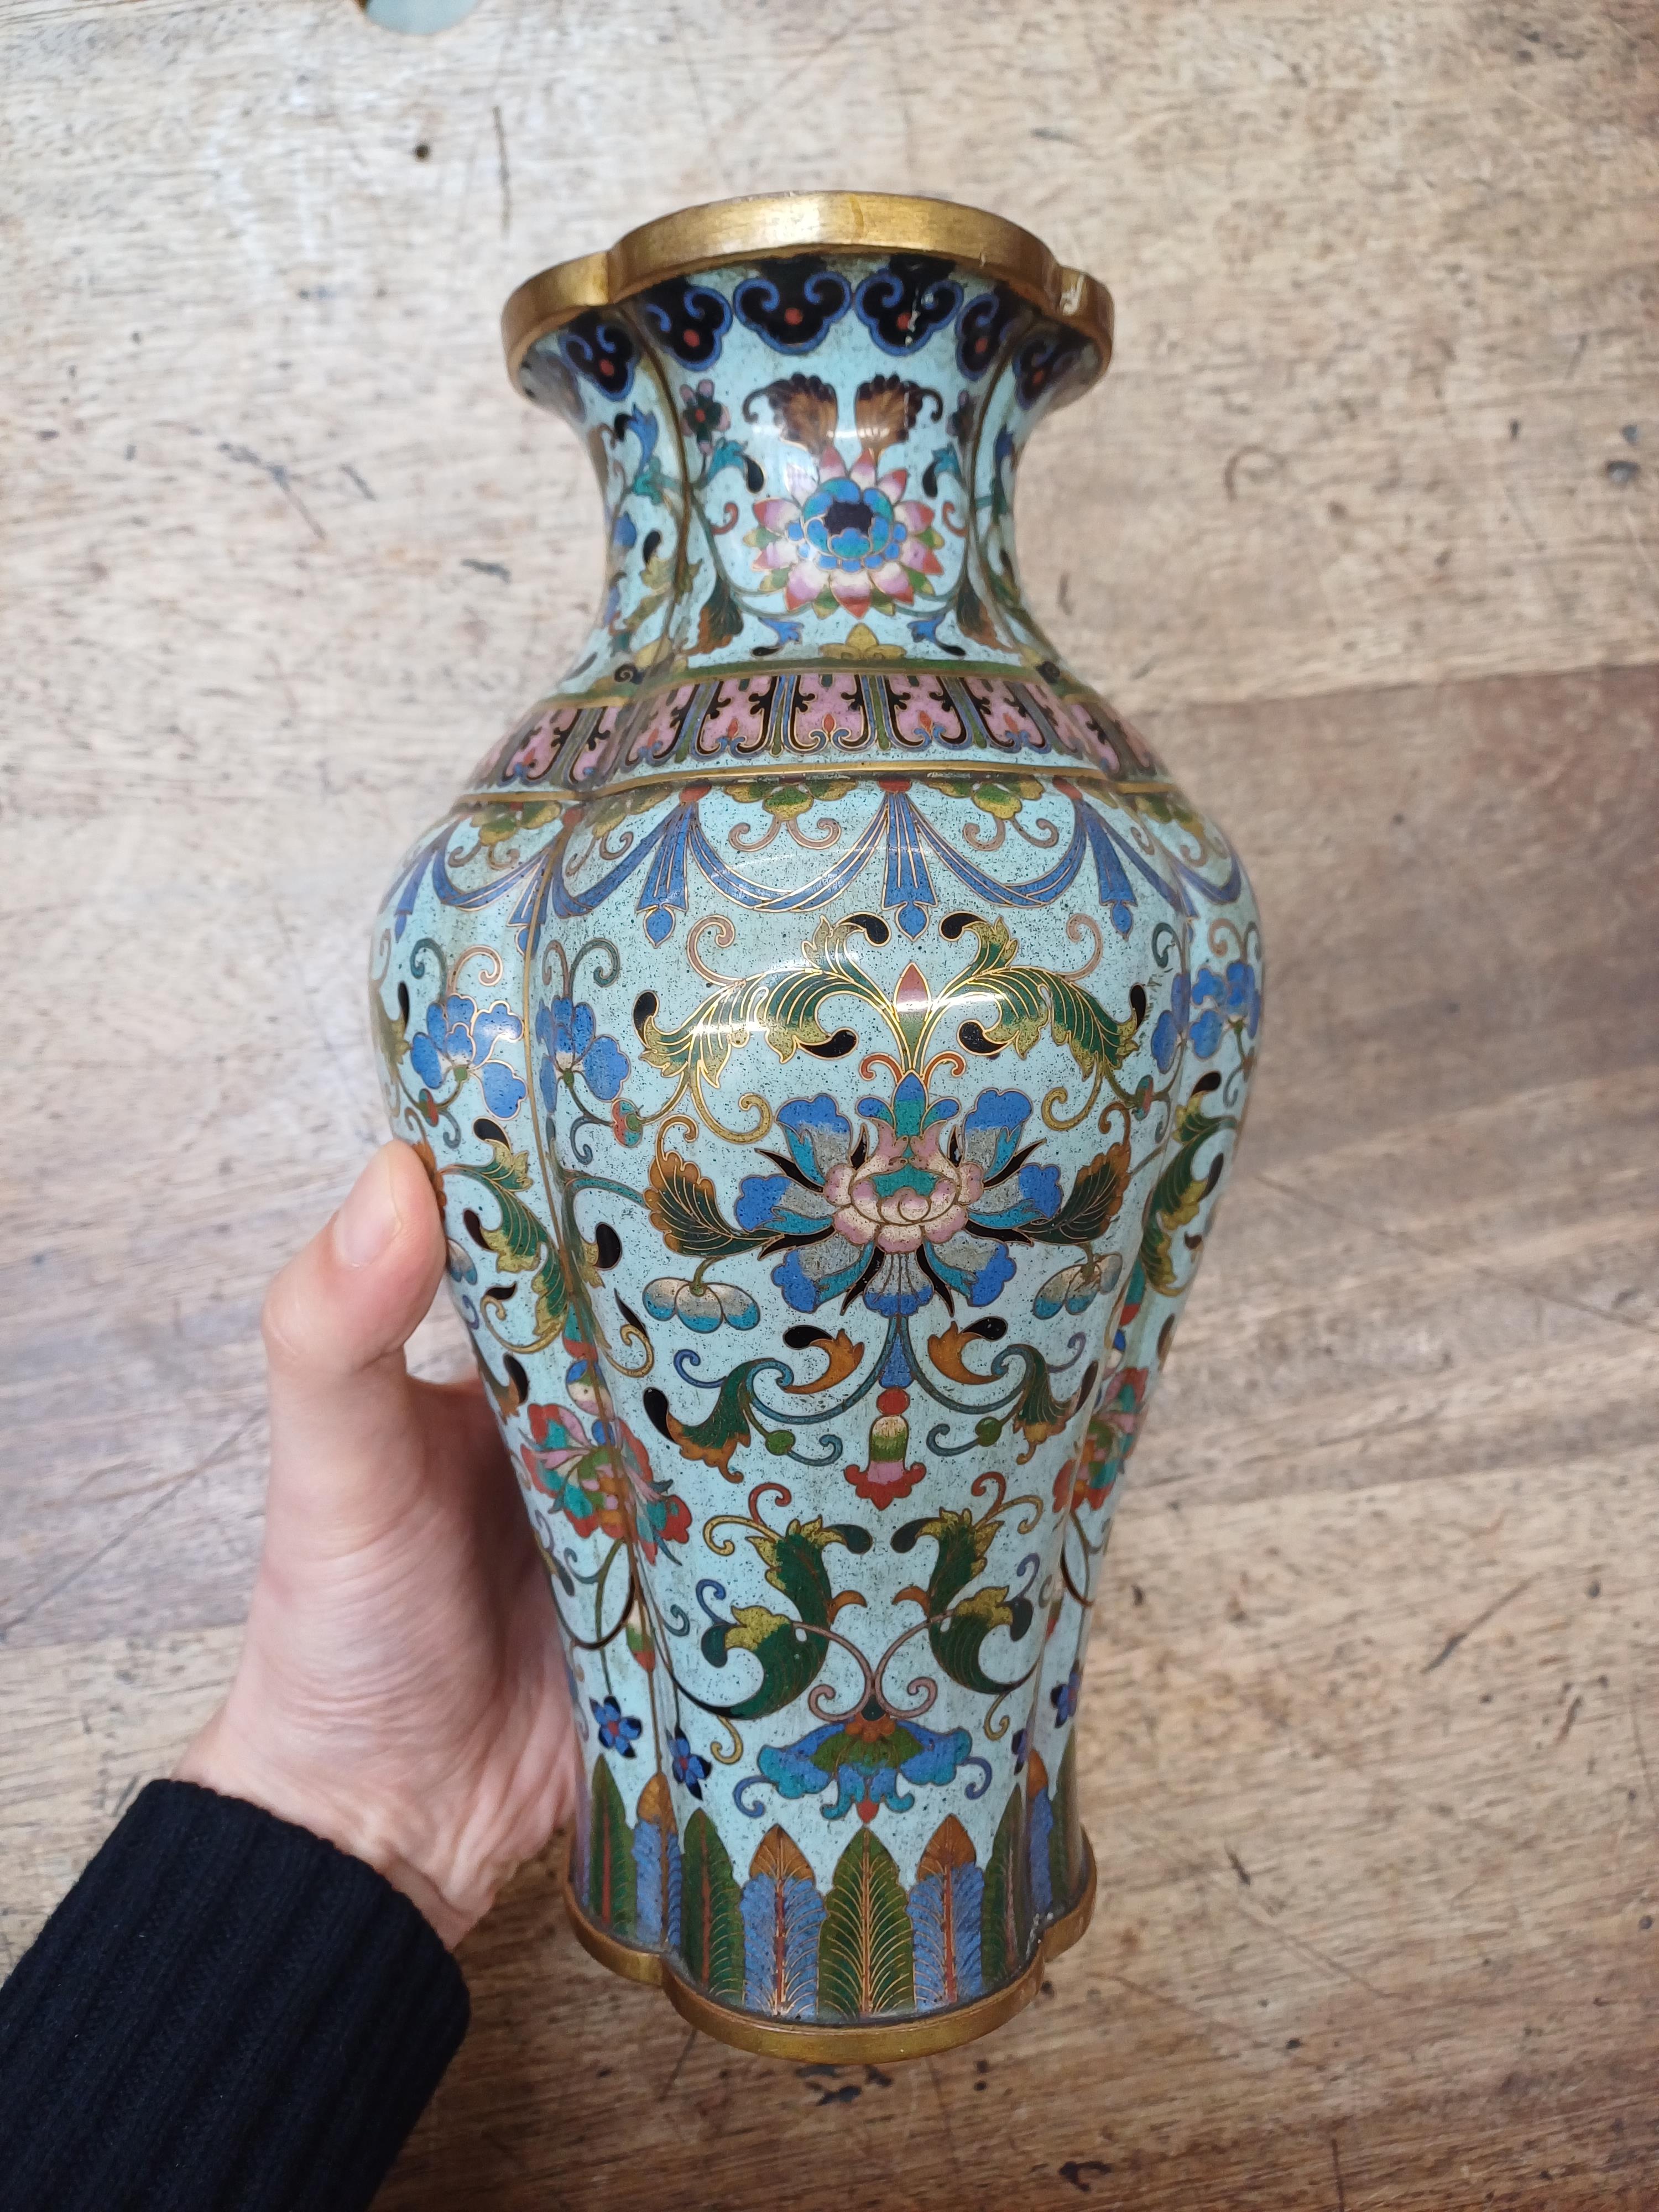 A PAIR OF CHINESE CLOISONNÉ ENAMEL VASES 清十八世紀 銅胎掐絲琺瑯番蓮紋瓶一對 - Image 3 of 17